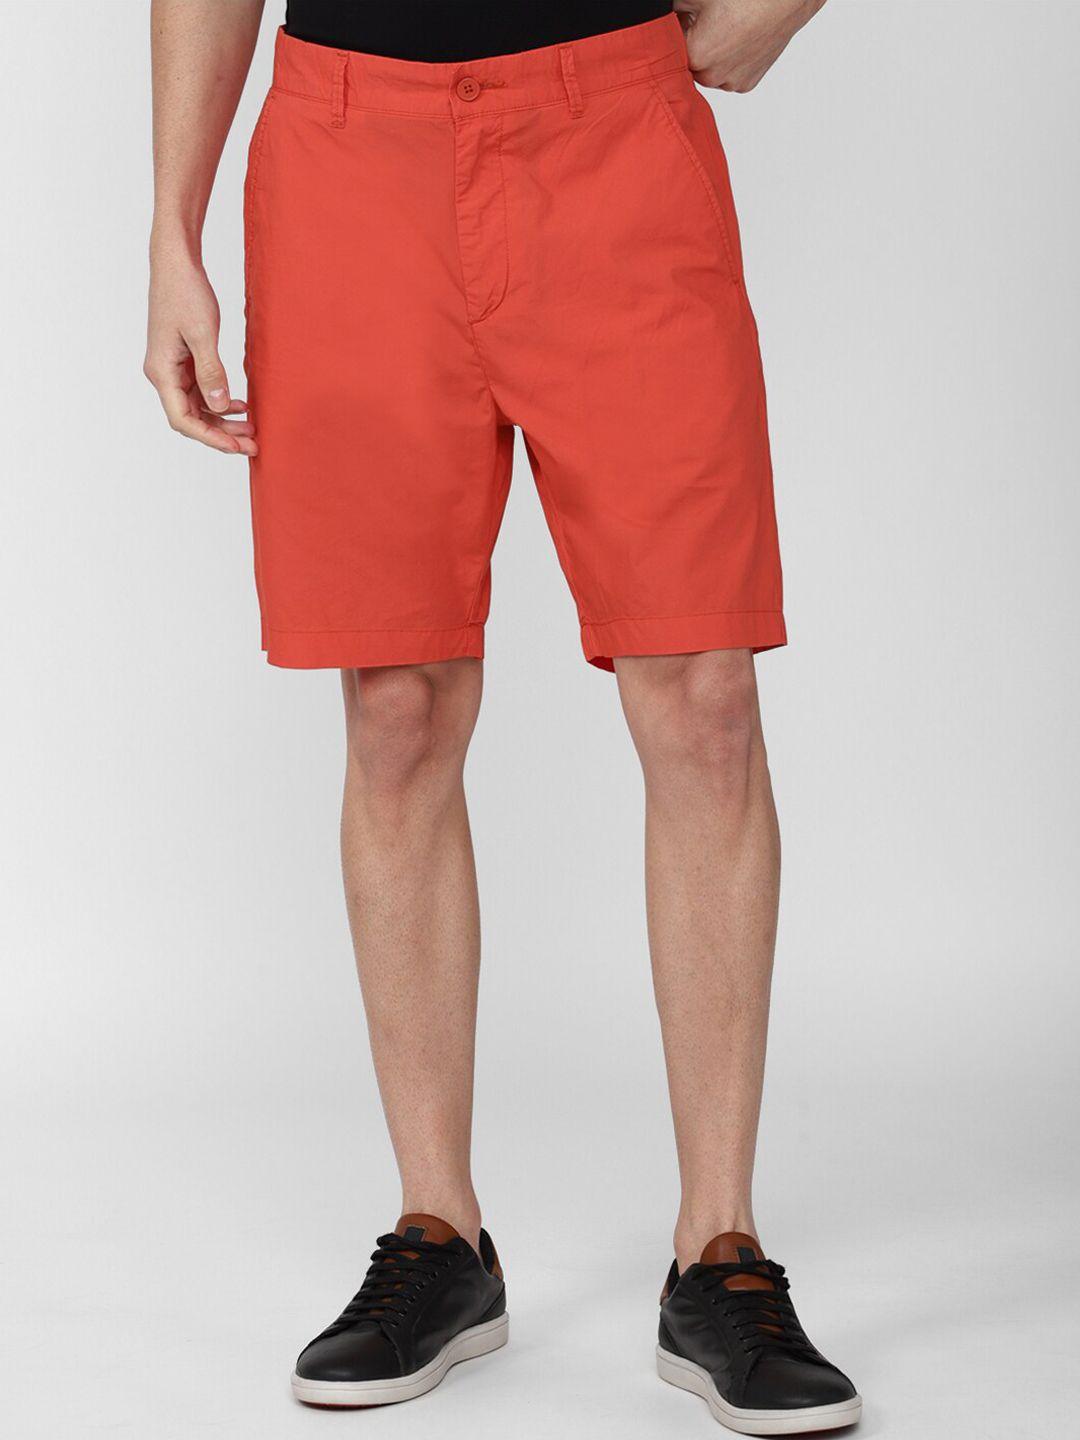 forever-21-men-orange-chino-shorts